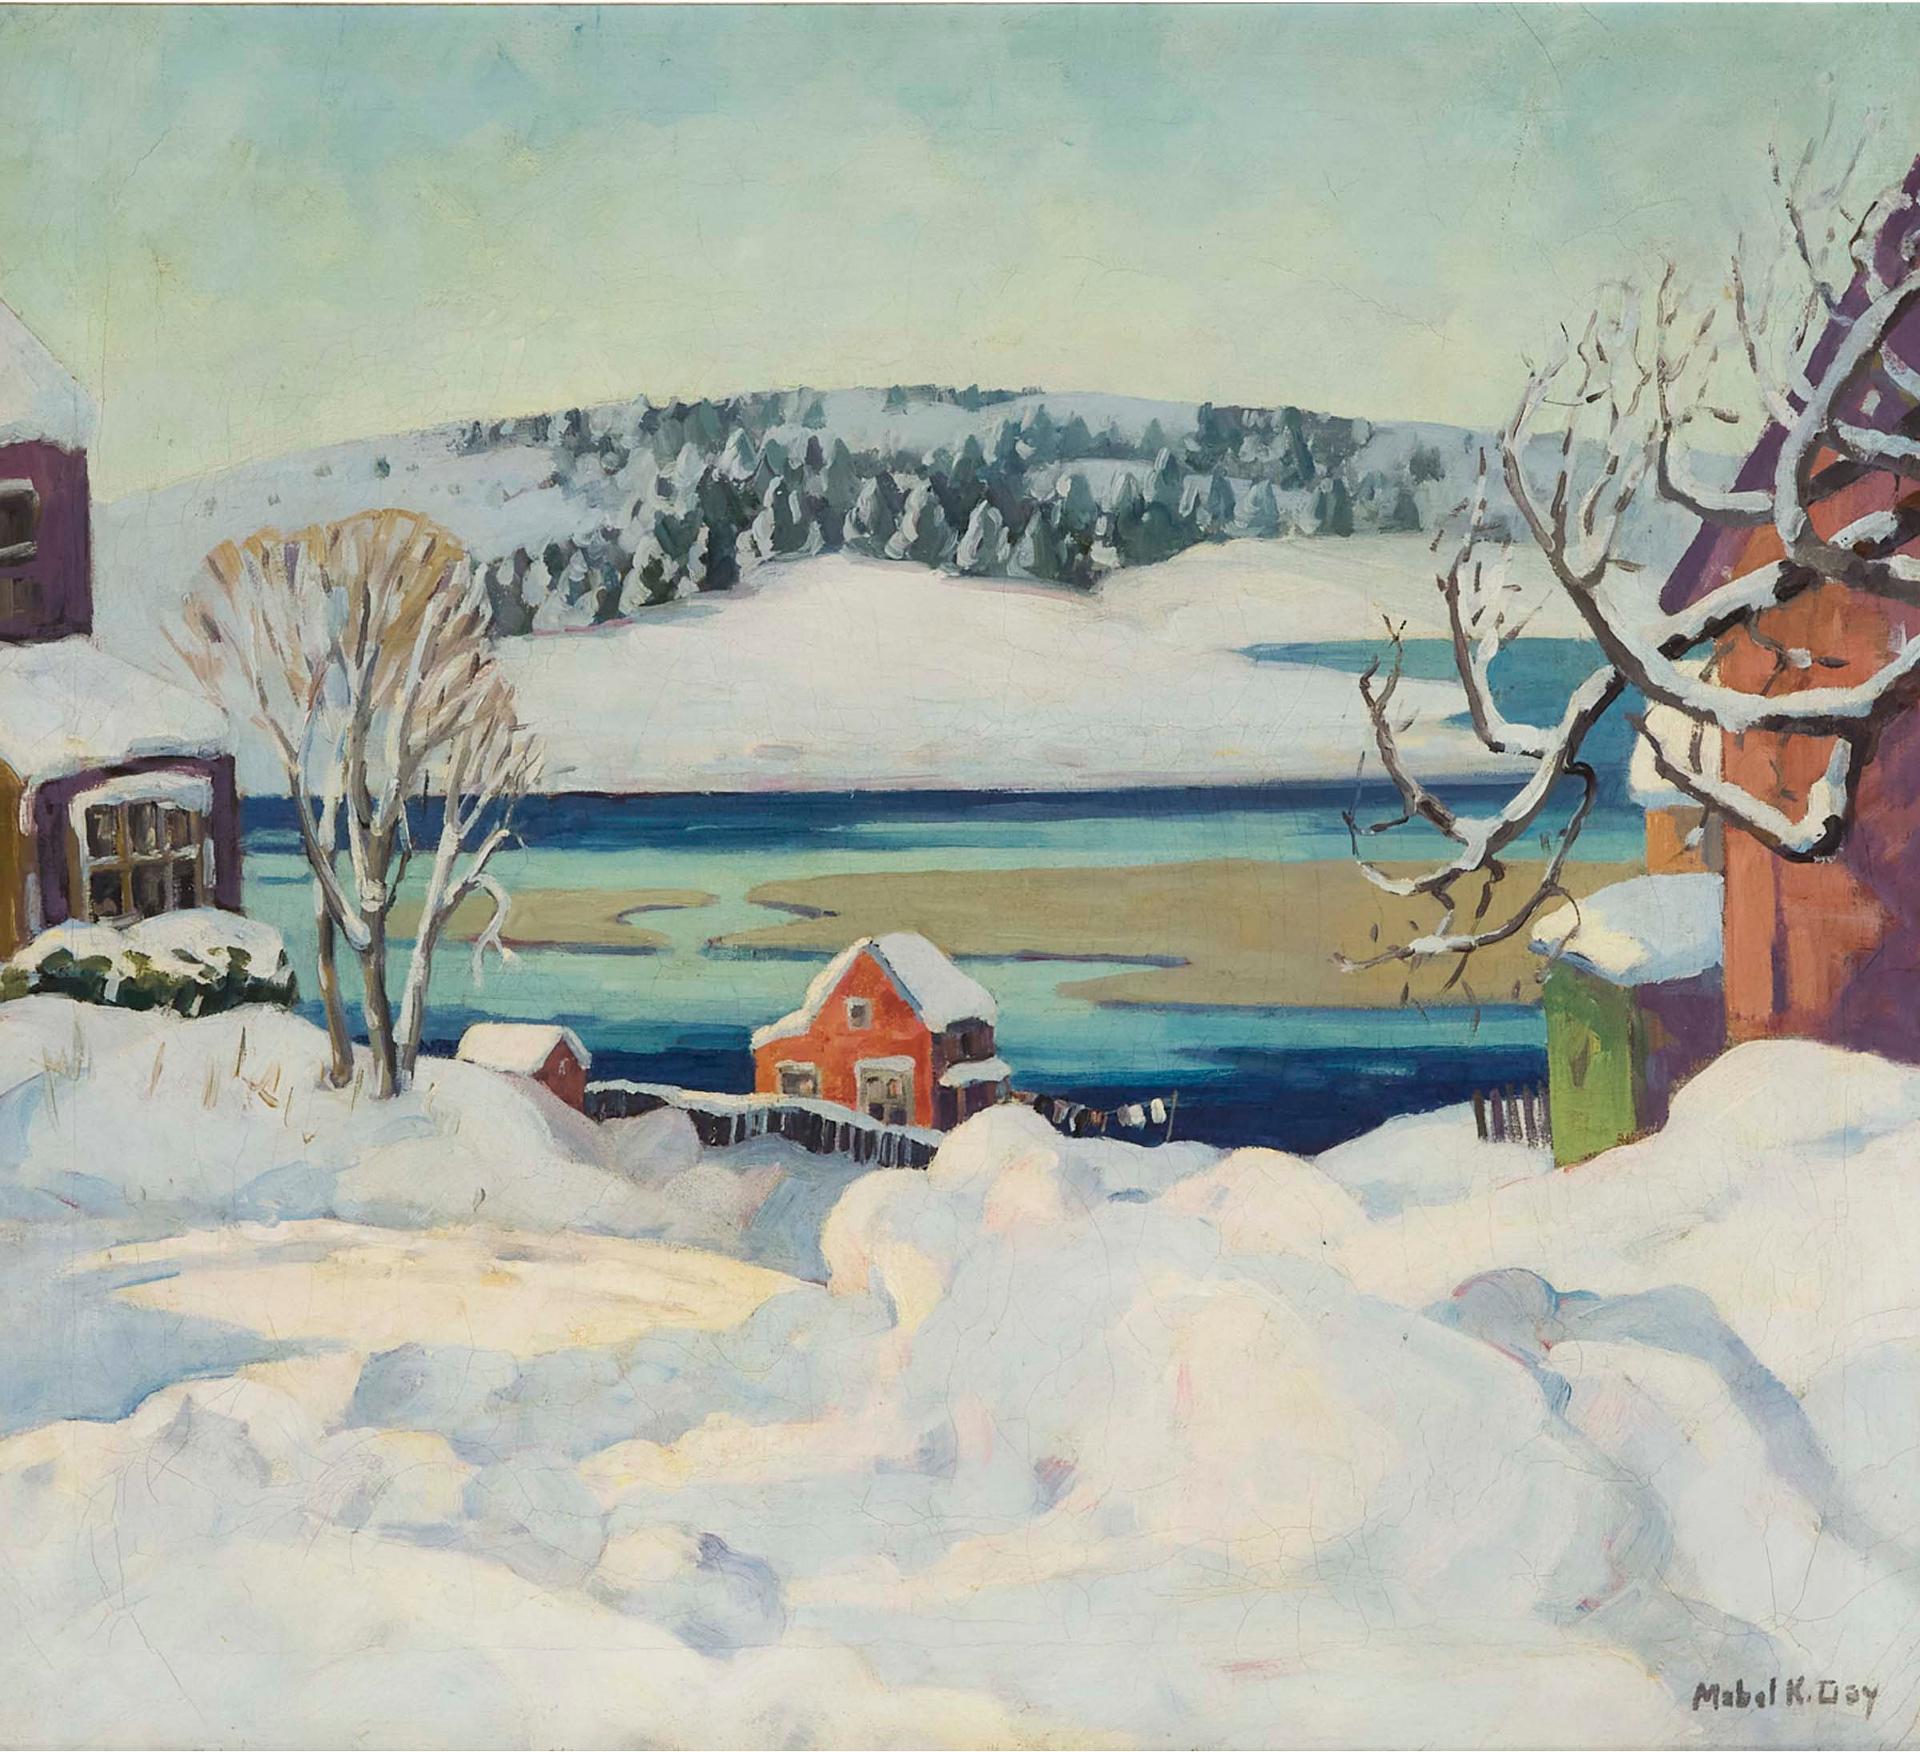 Mabel Killam Day - Untitled (Winter Landscape)